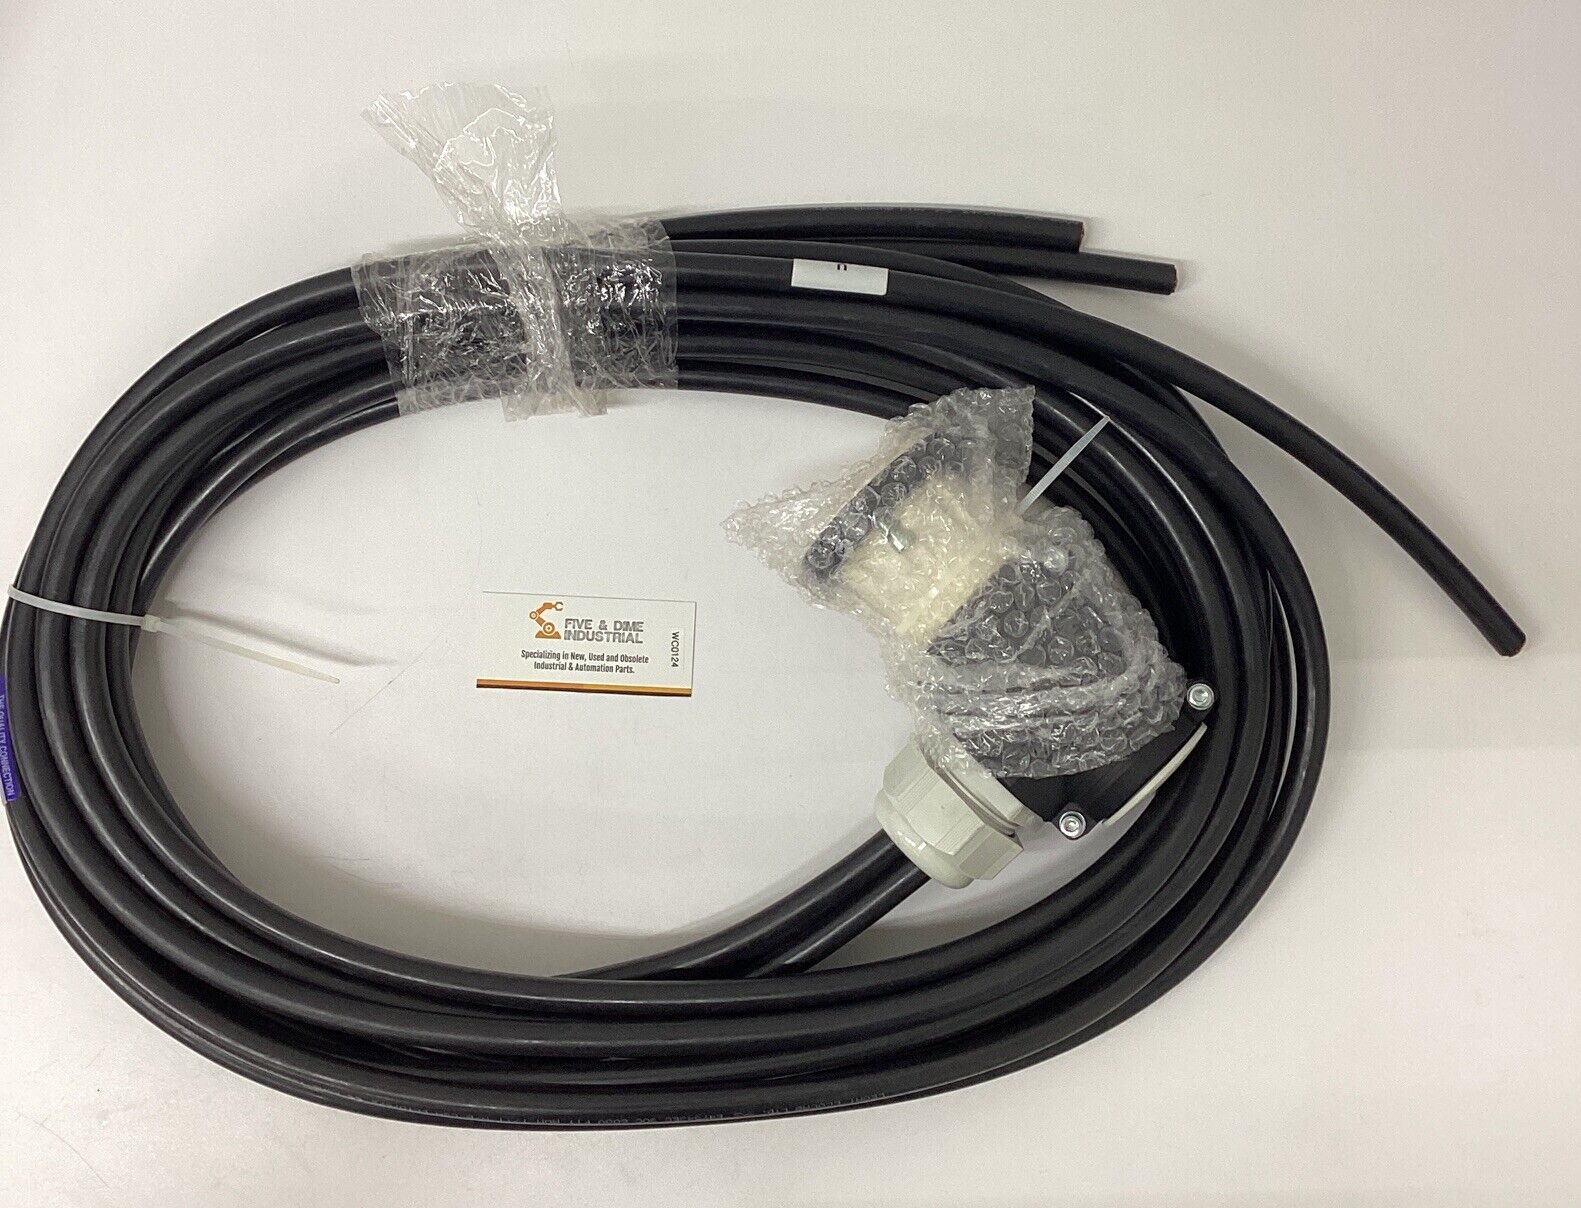 Leoni 3.209.16.3001B 3 Pole Primary Power Cable (CBL155)